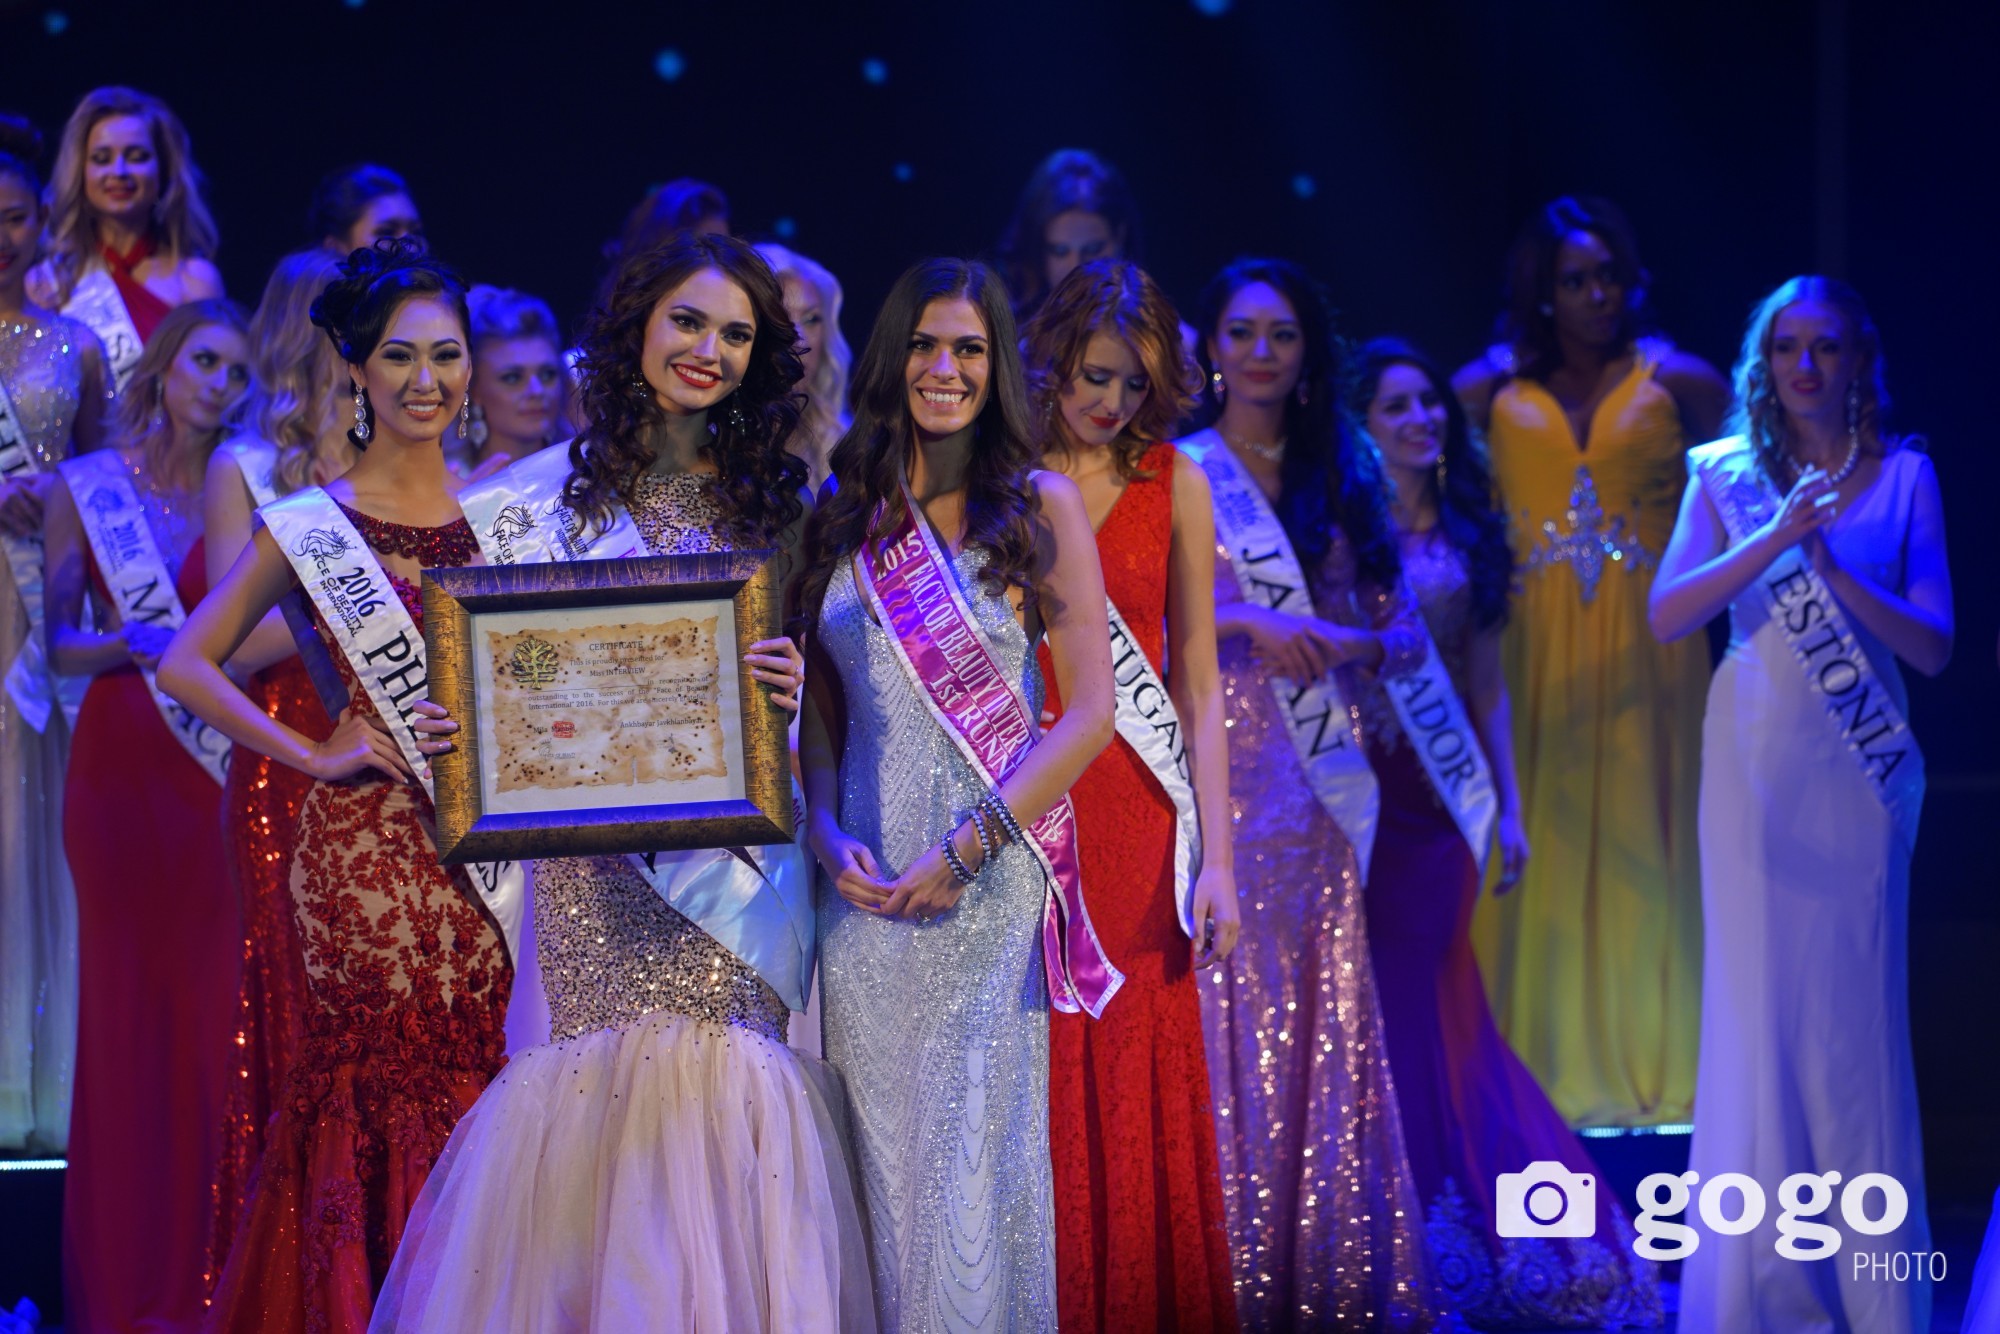 Miss Intelligent award goes to Miss Russia 